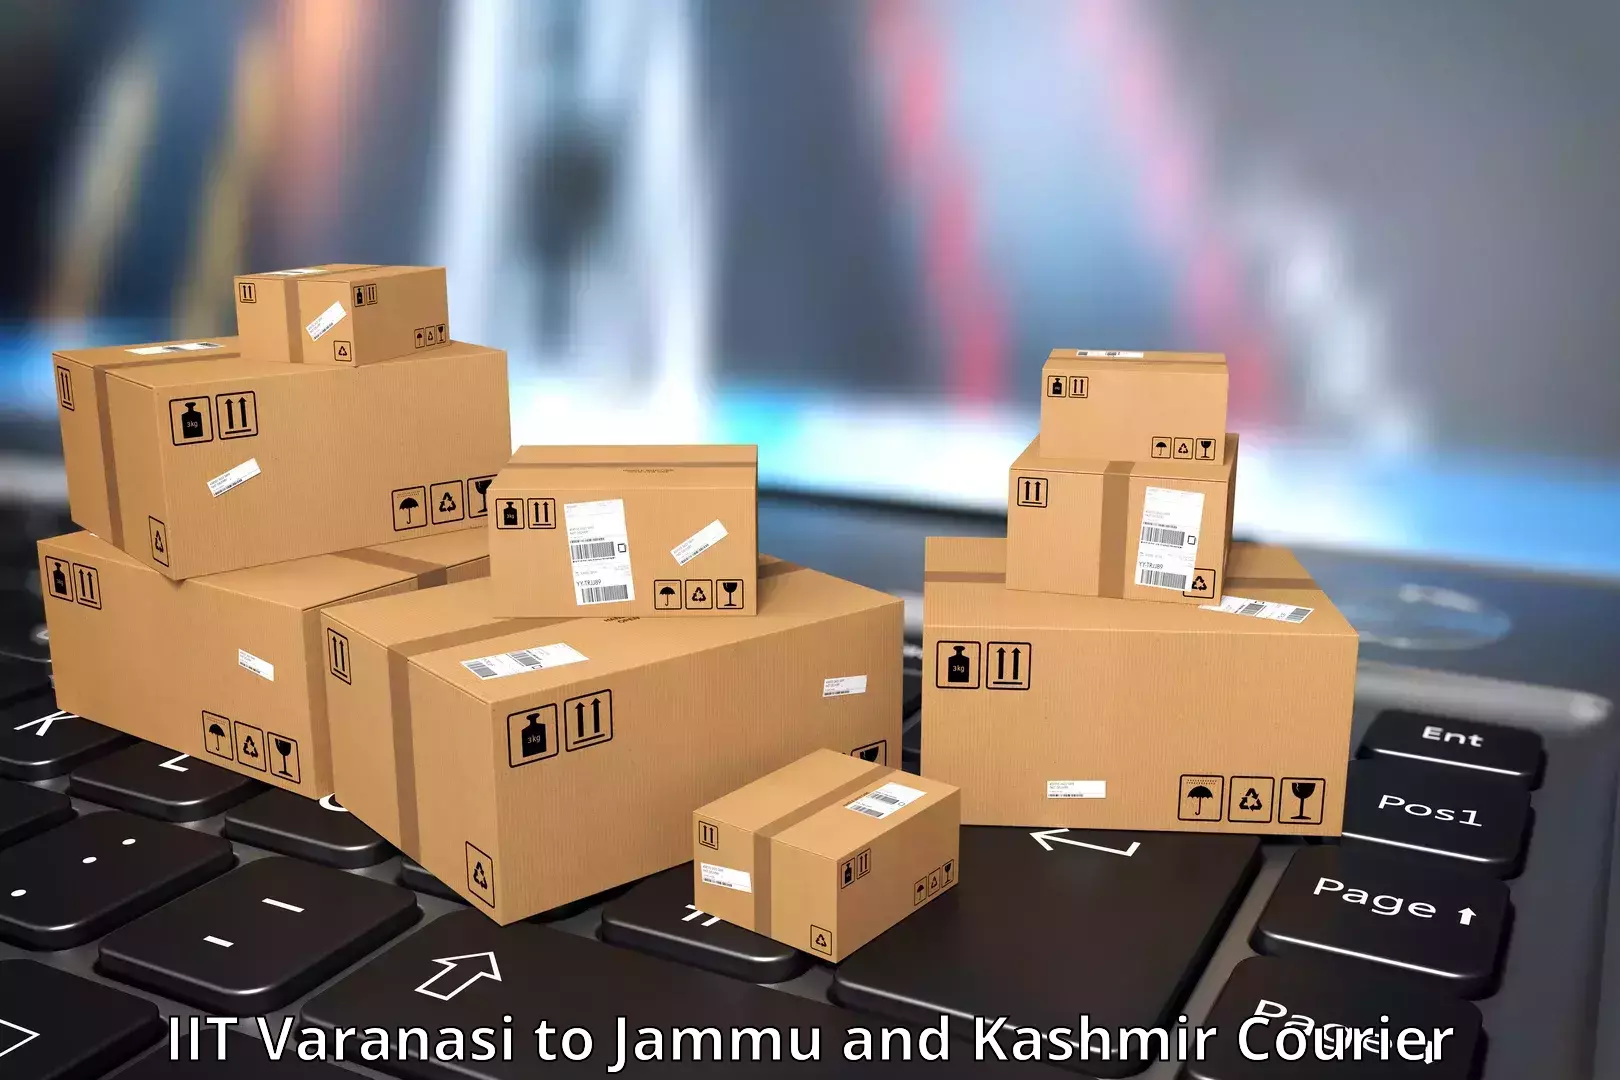 Courier app IIT Varanasi to Bandipur